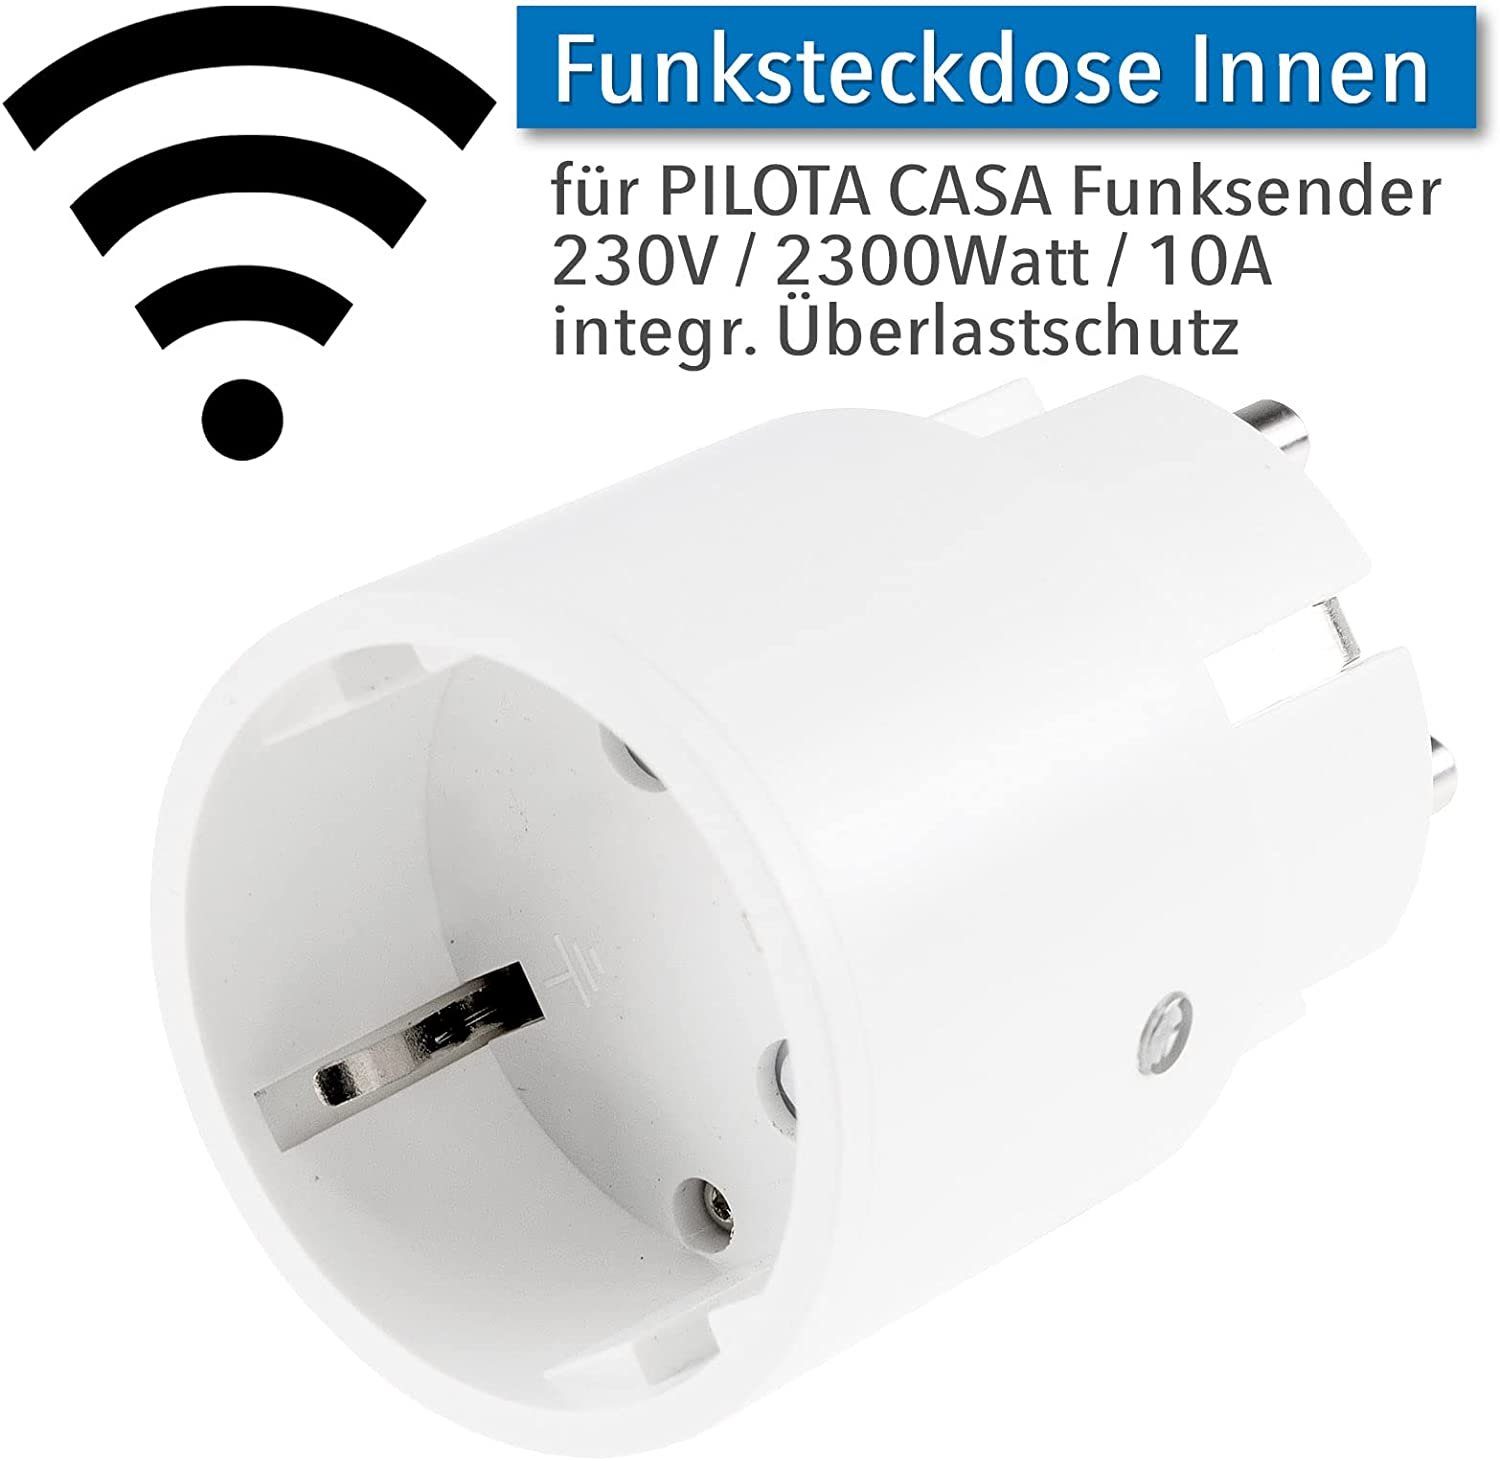 ChiliTec Steckdosen-Thermostat Thermostat Funk Set - Temperatur mit Funk-Steckdose mit Steckdose